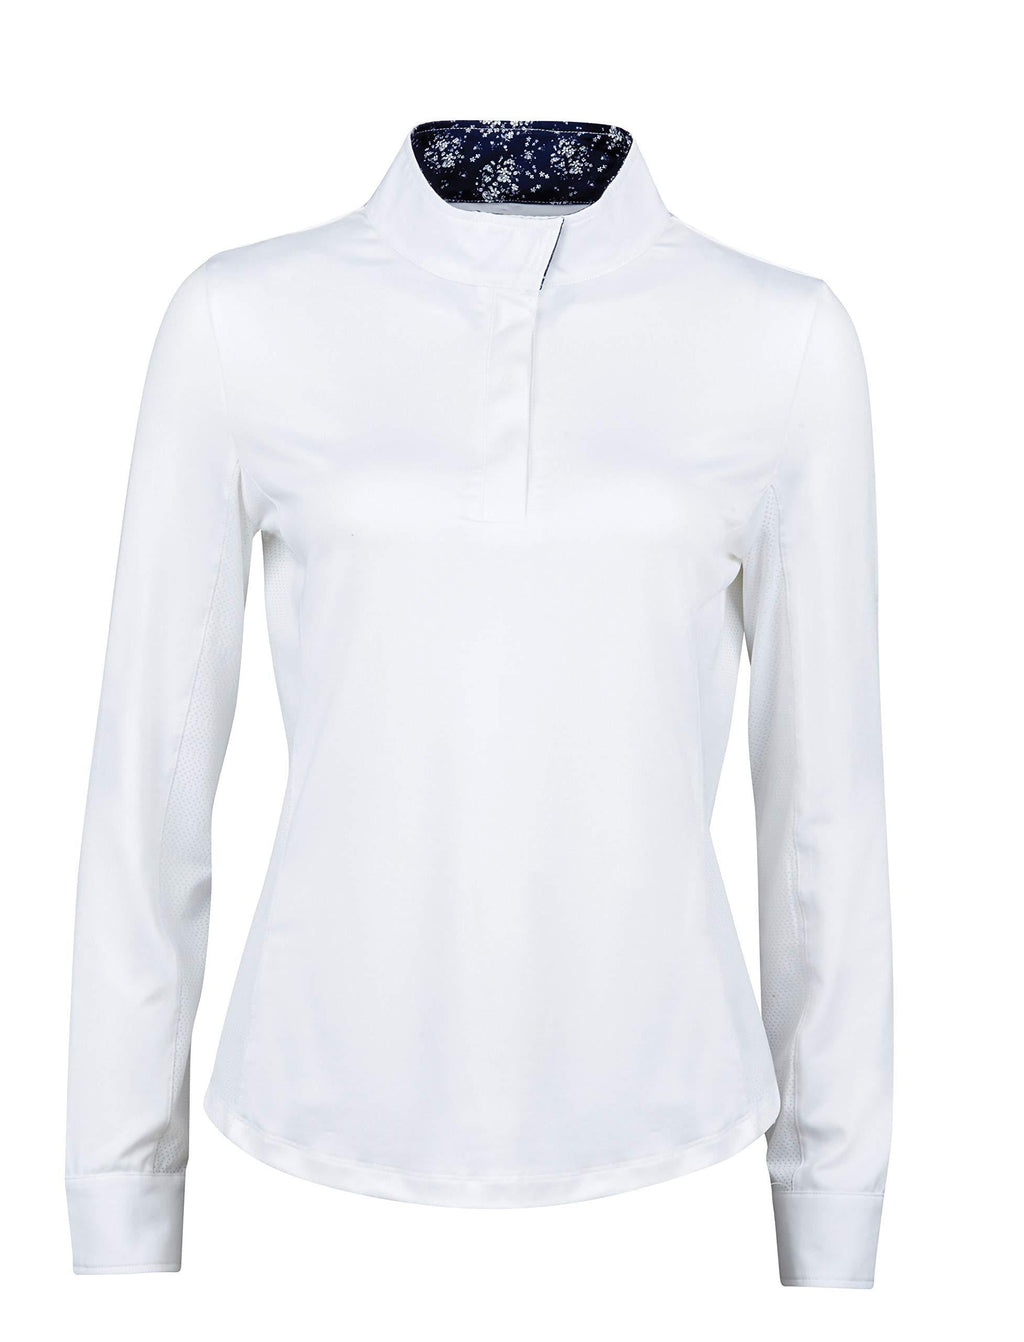 Dublin Ria Long Sleeve Competition Shirt White/Navy Ladies 2Xlarge - PawsPlanet Australia